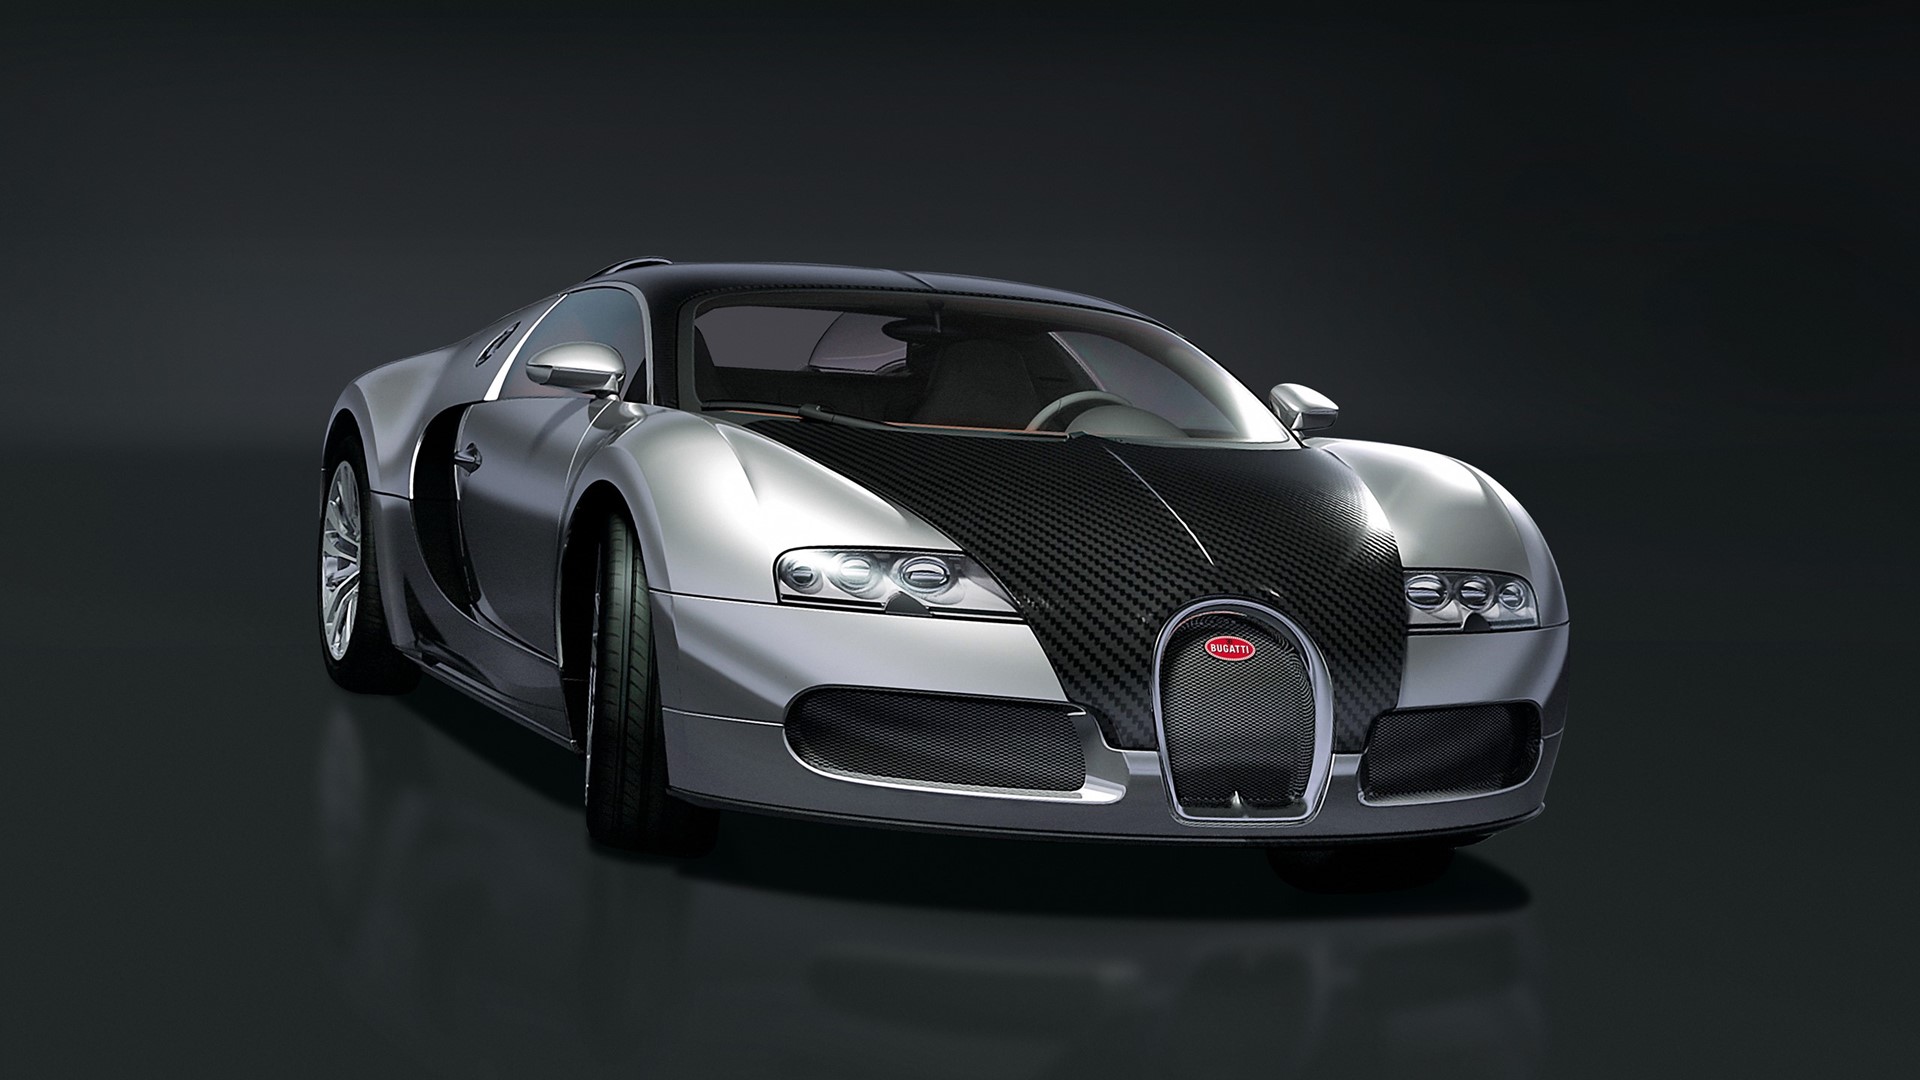 Images Of The Bugatti Veyron